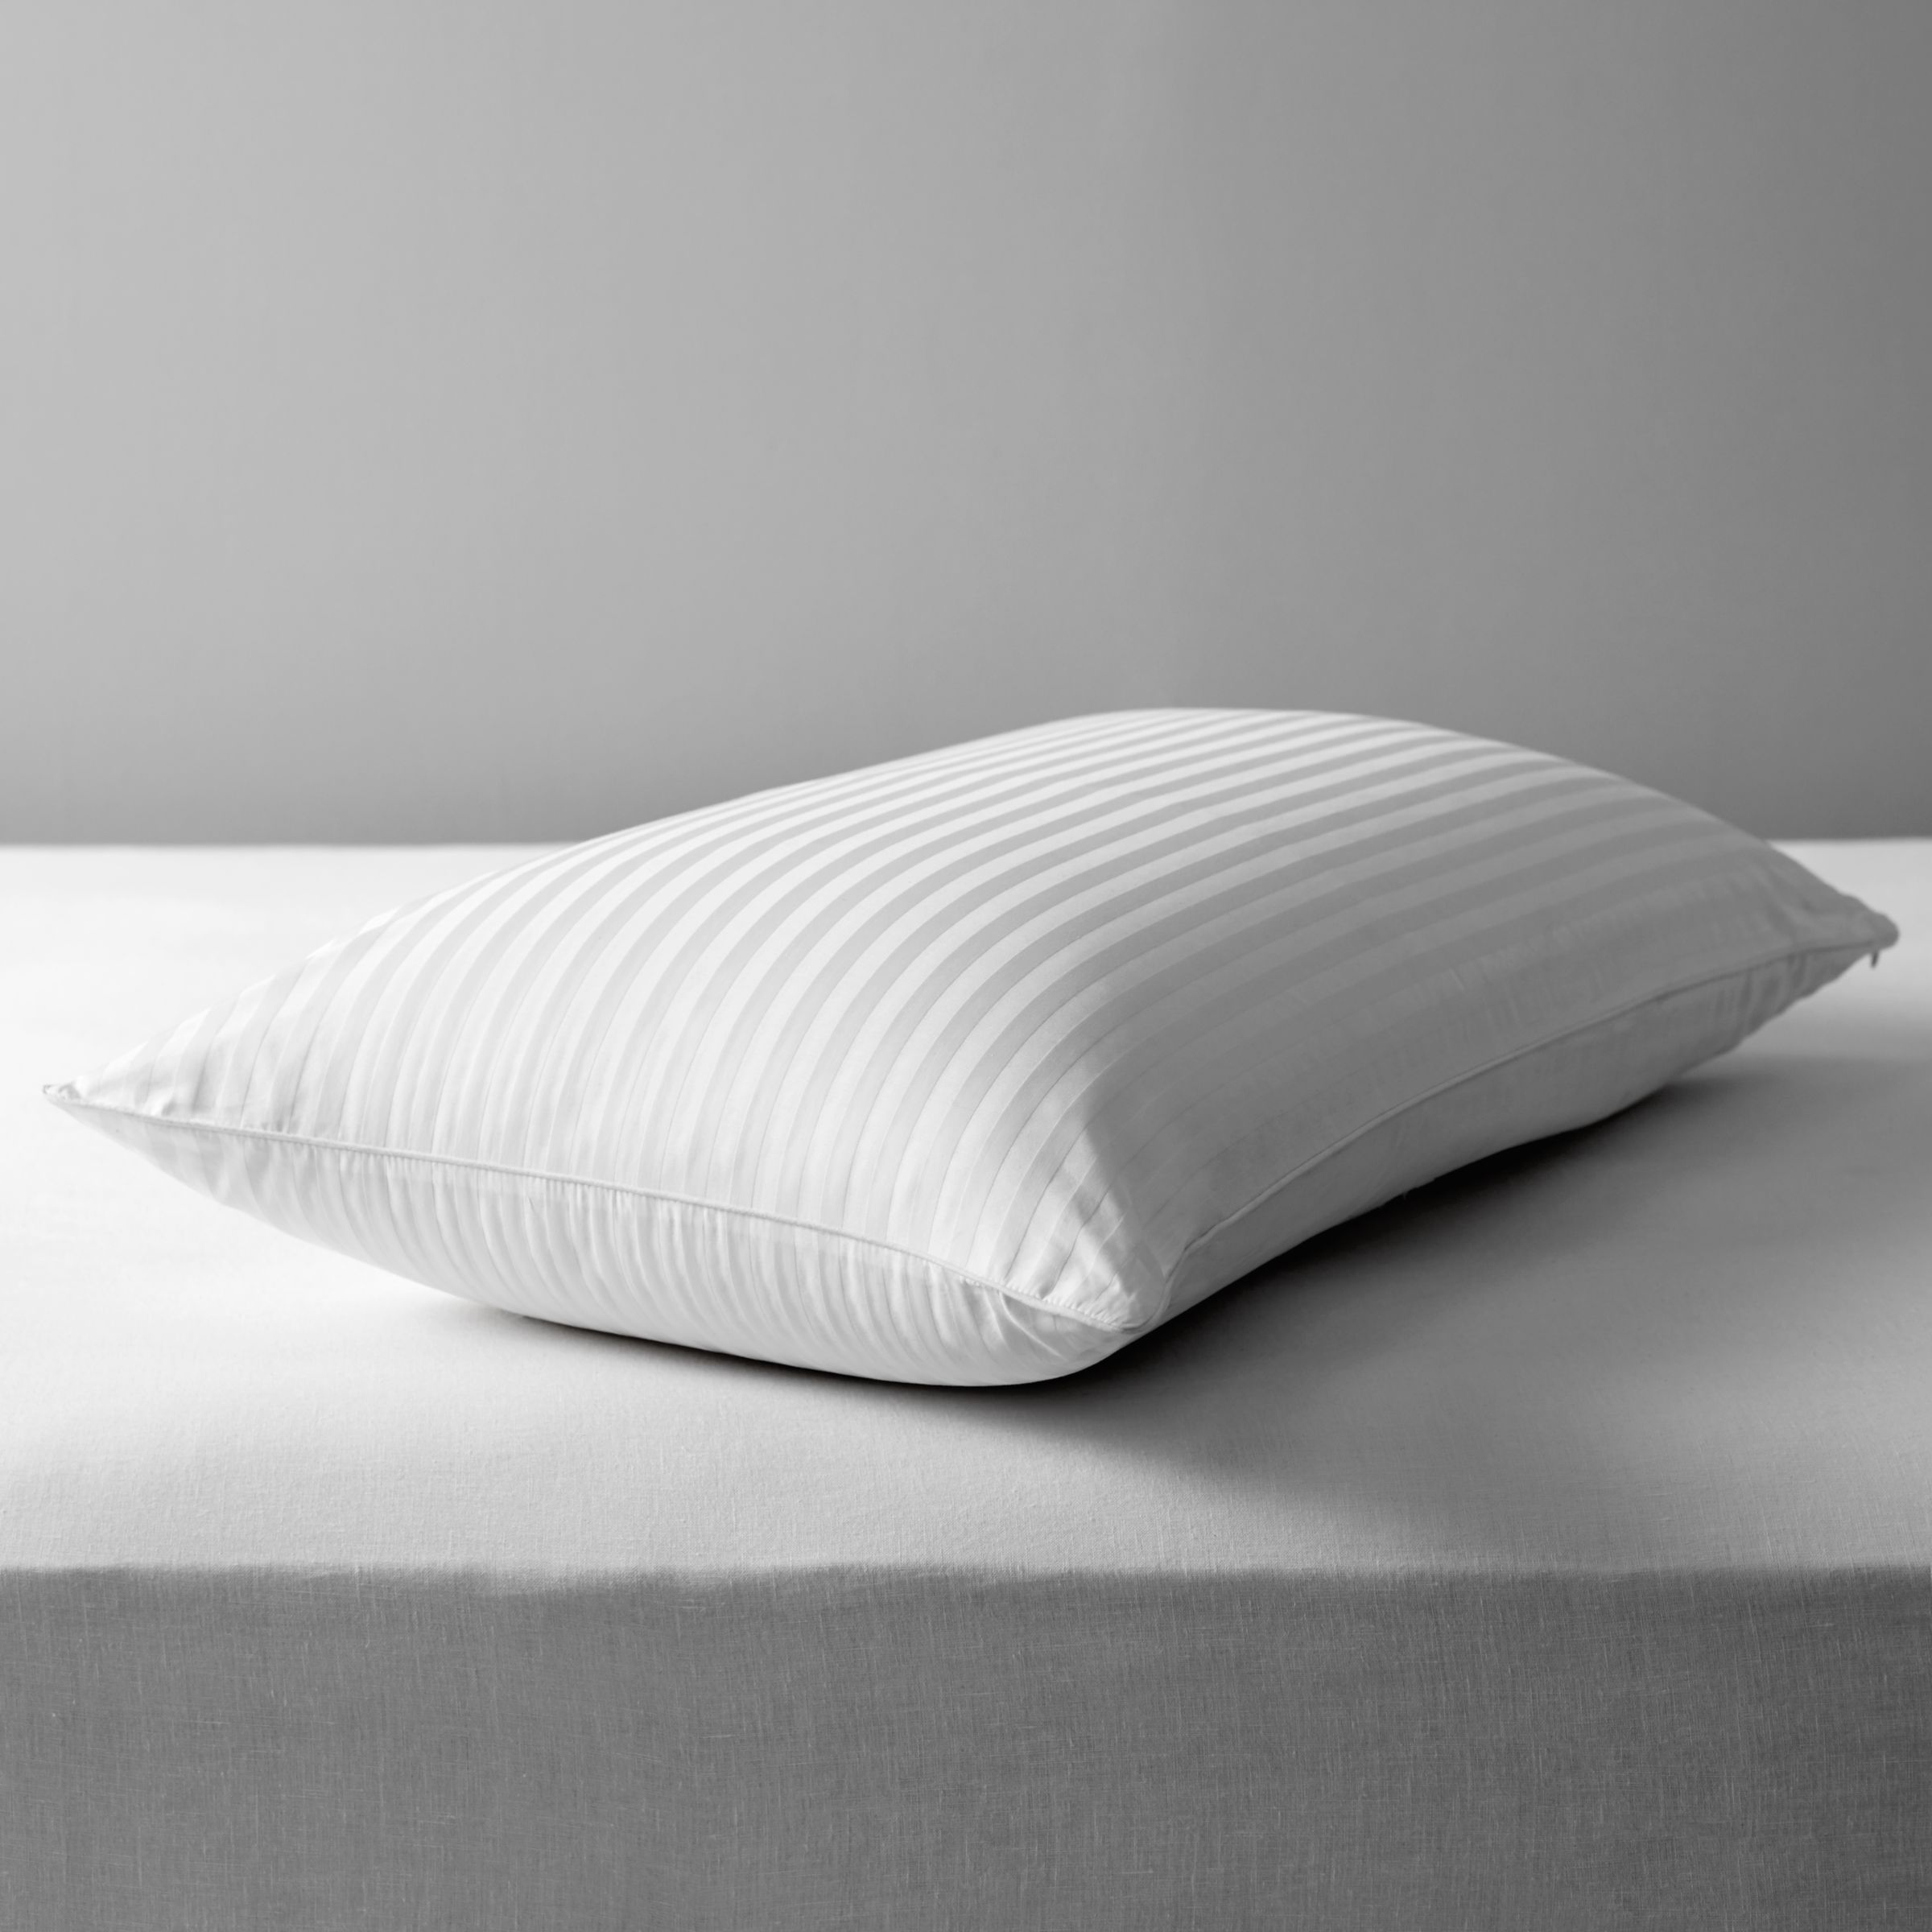 Dunlopillo Super Comfort Speciality Pillow 119482